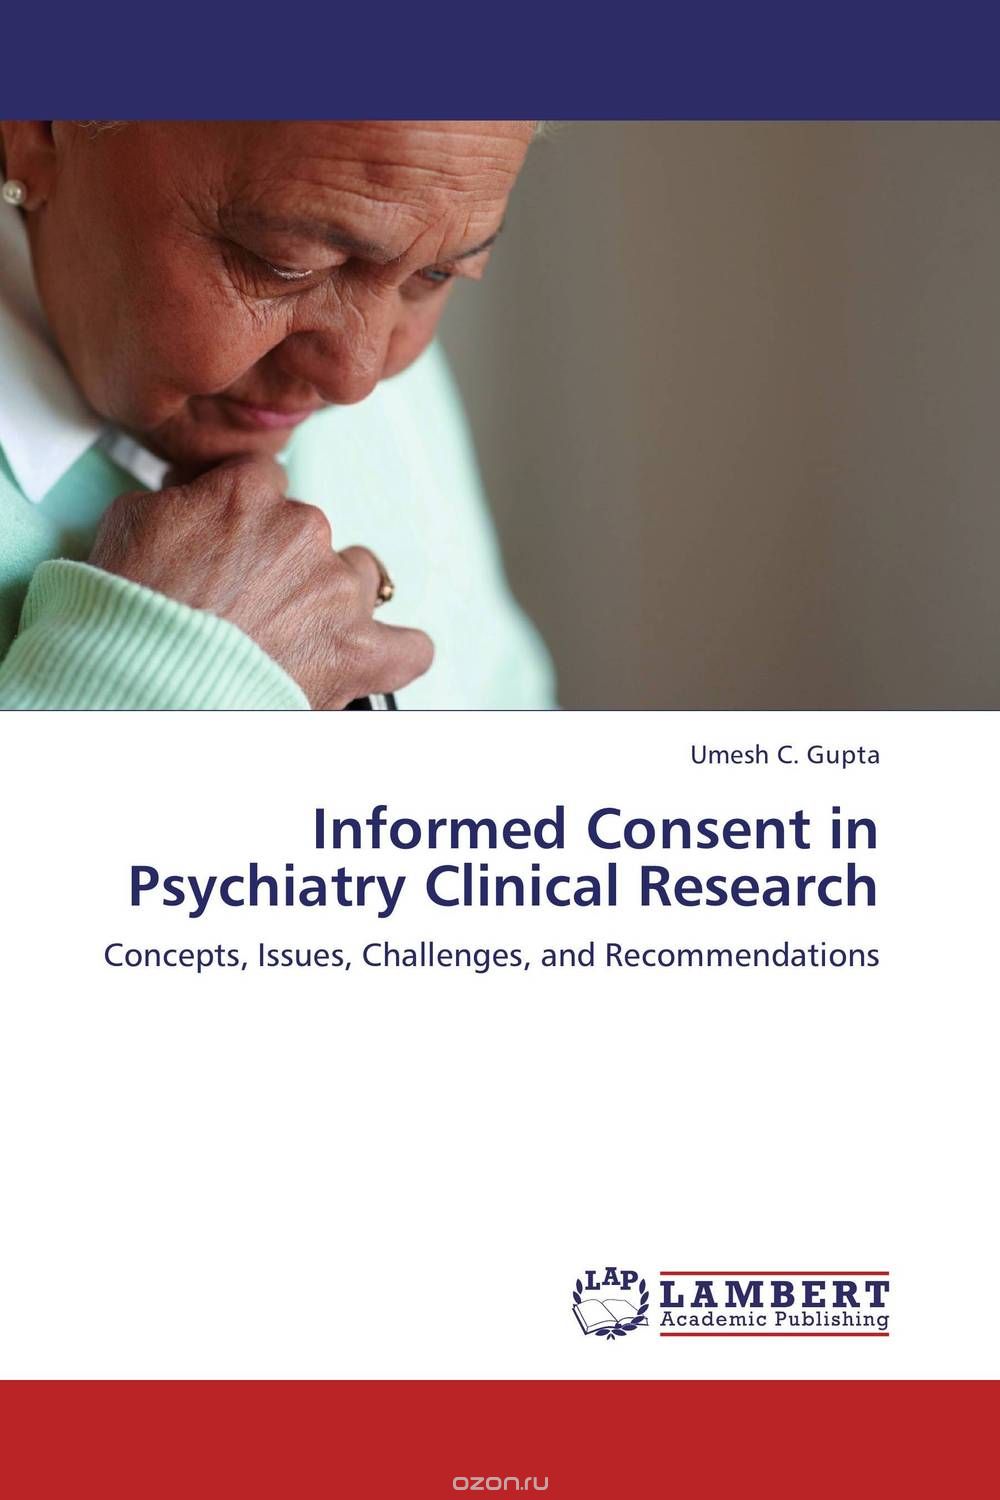 Скачать книгу "Informed Consent in Psychiatry Clinical Research"